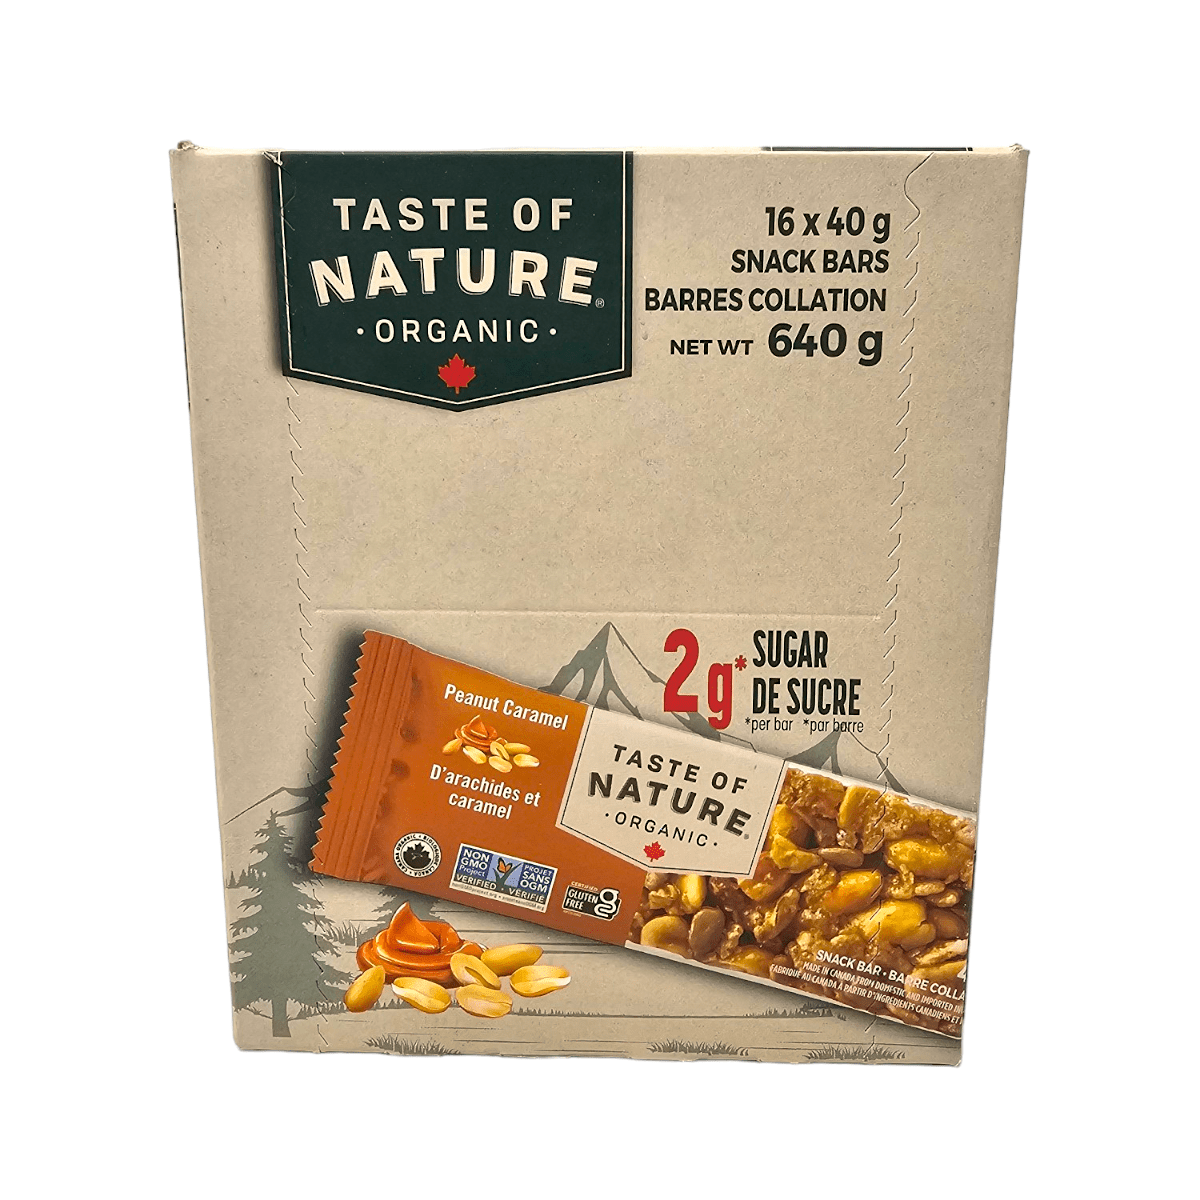 Taste of Nature Snack Bars Peanut Caramel ( Case of 16x40g)